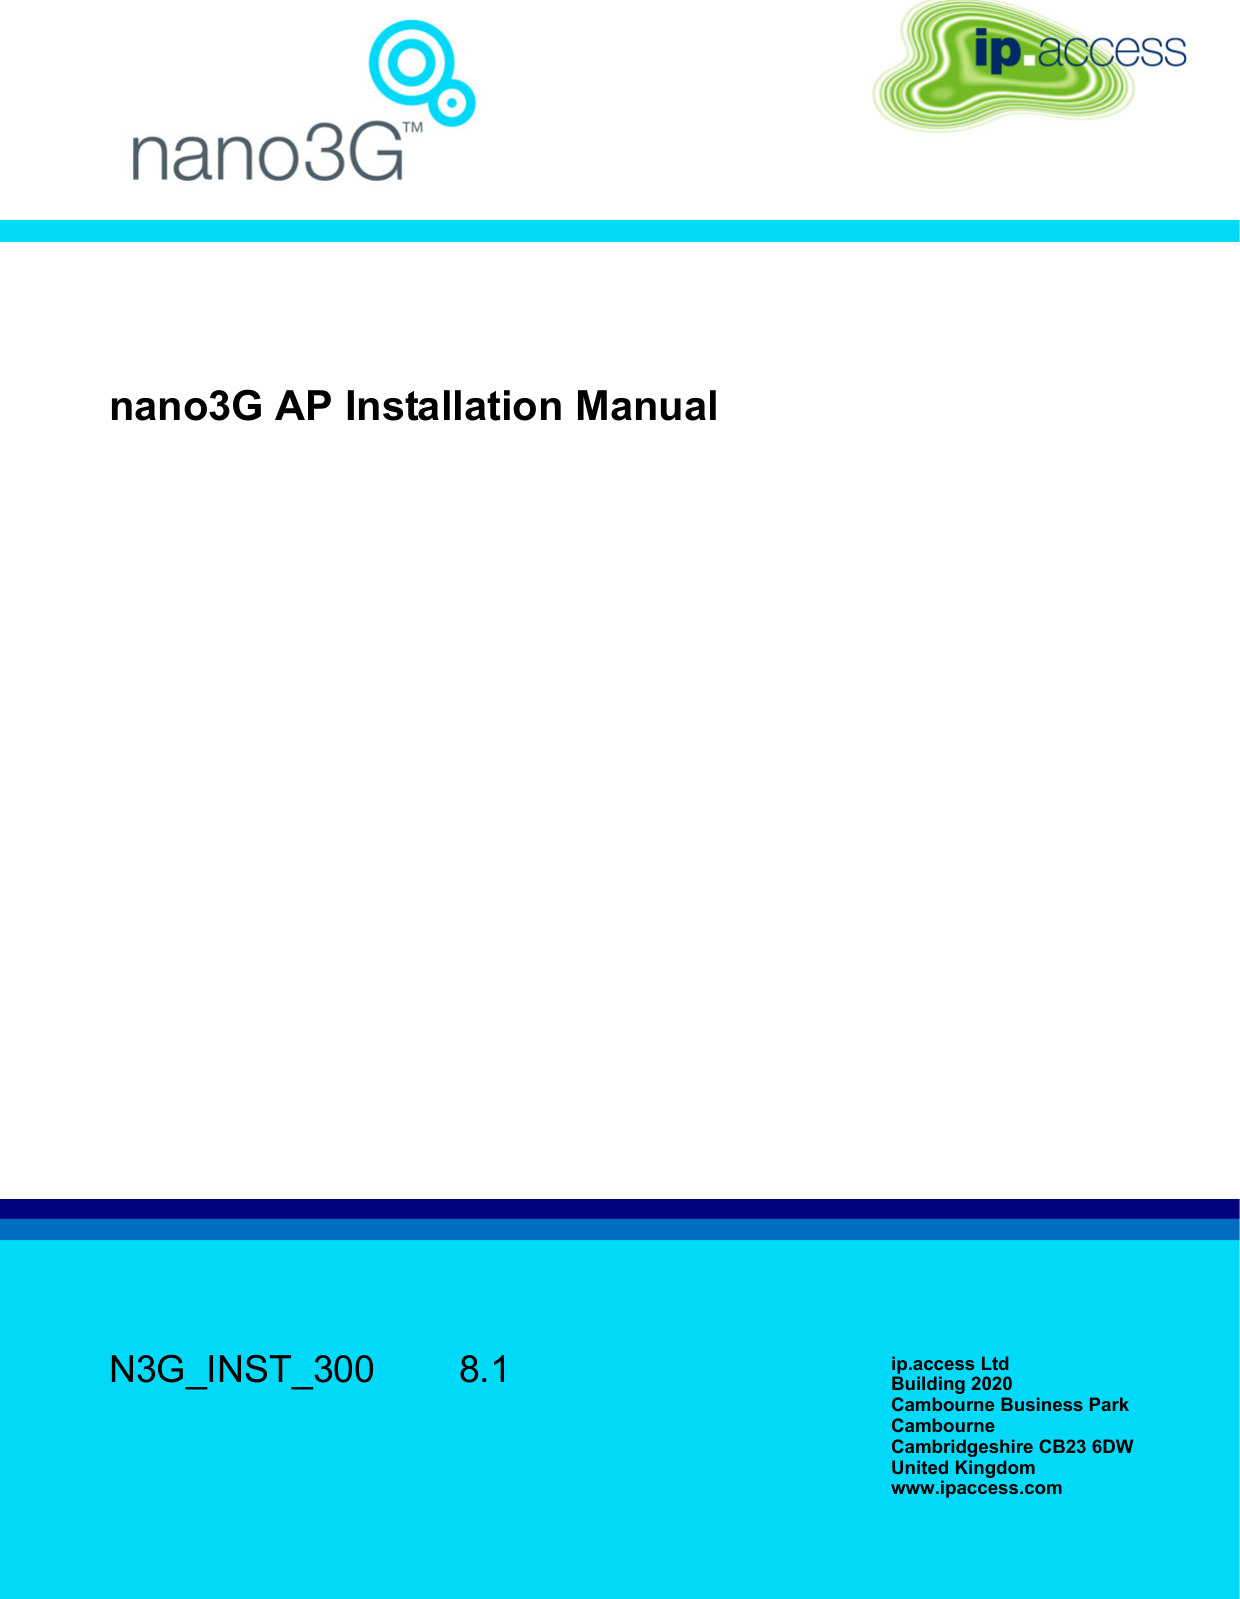 nano3G AP Installation ManualN3G_INST_300 8.1 ip.access LtdBuilding 2020Cambourne Business ParkCambourneCambridgeshire CB23 6DWUnited Kingdomwww.ipaccess.com